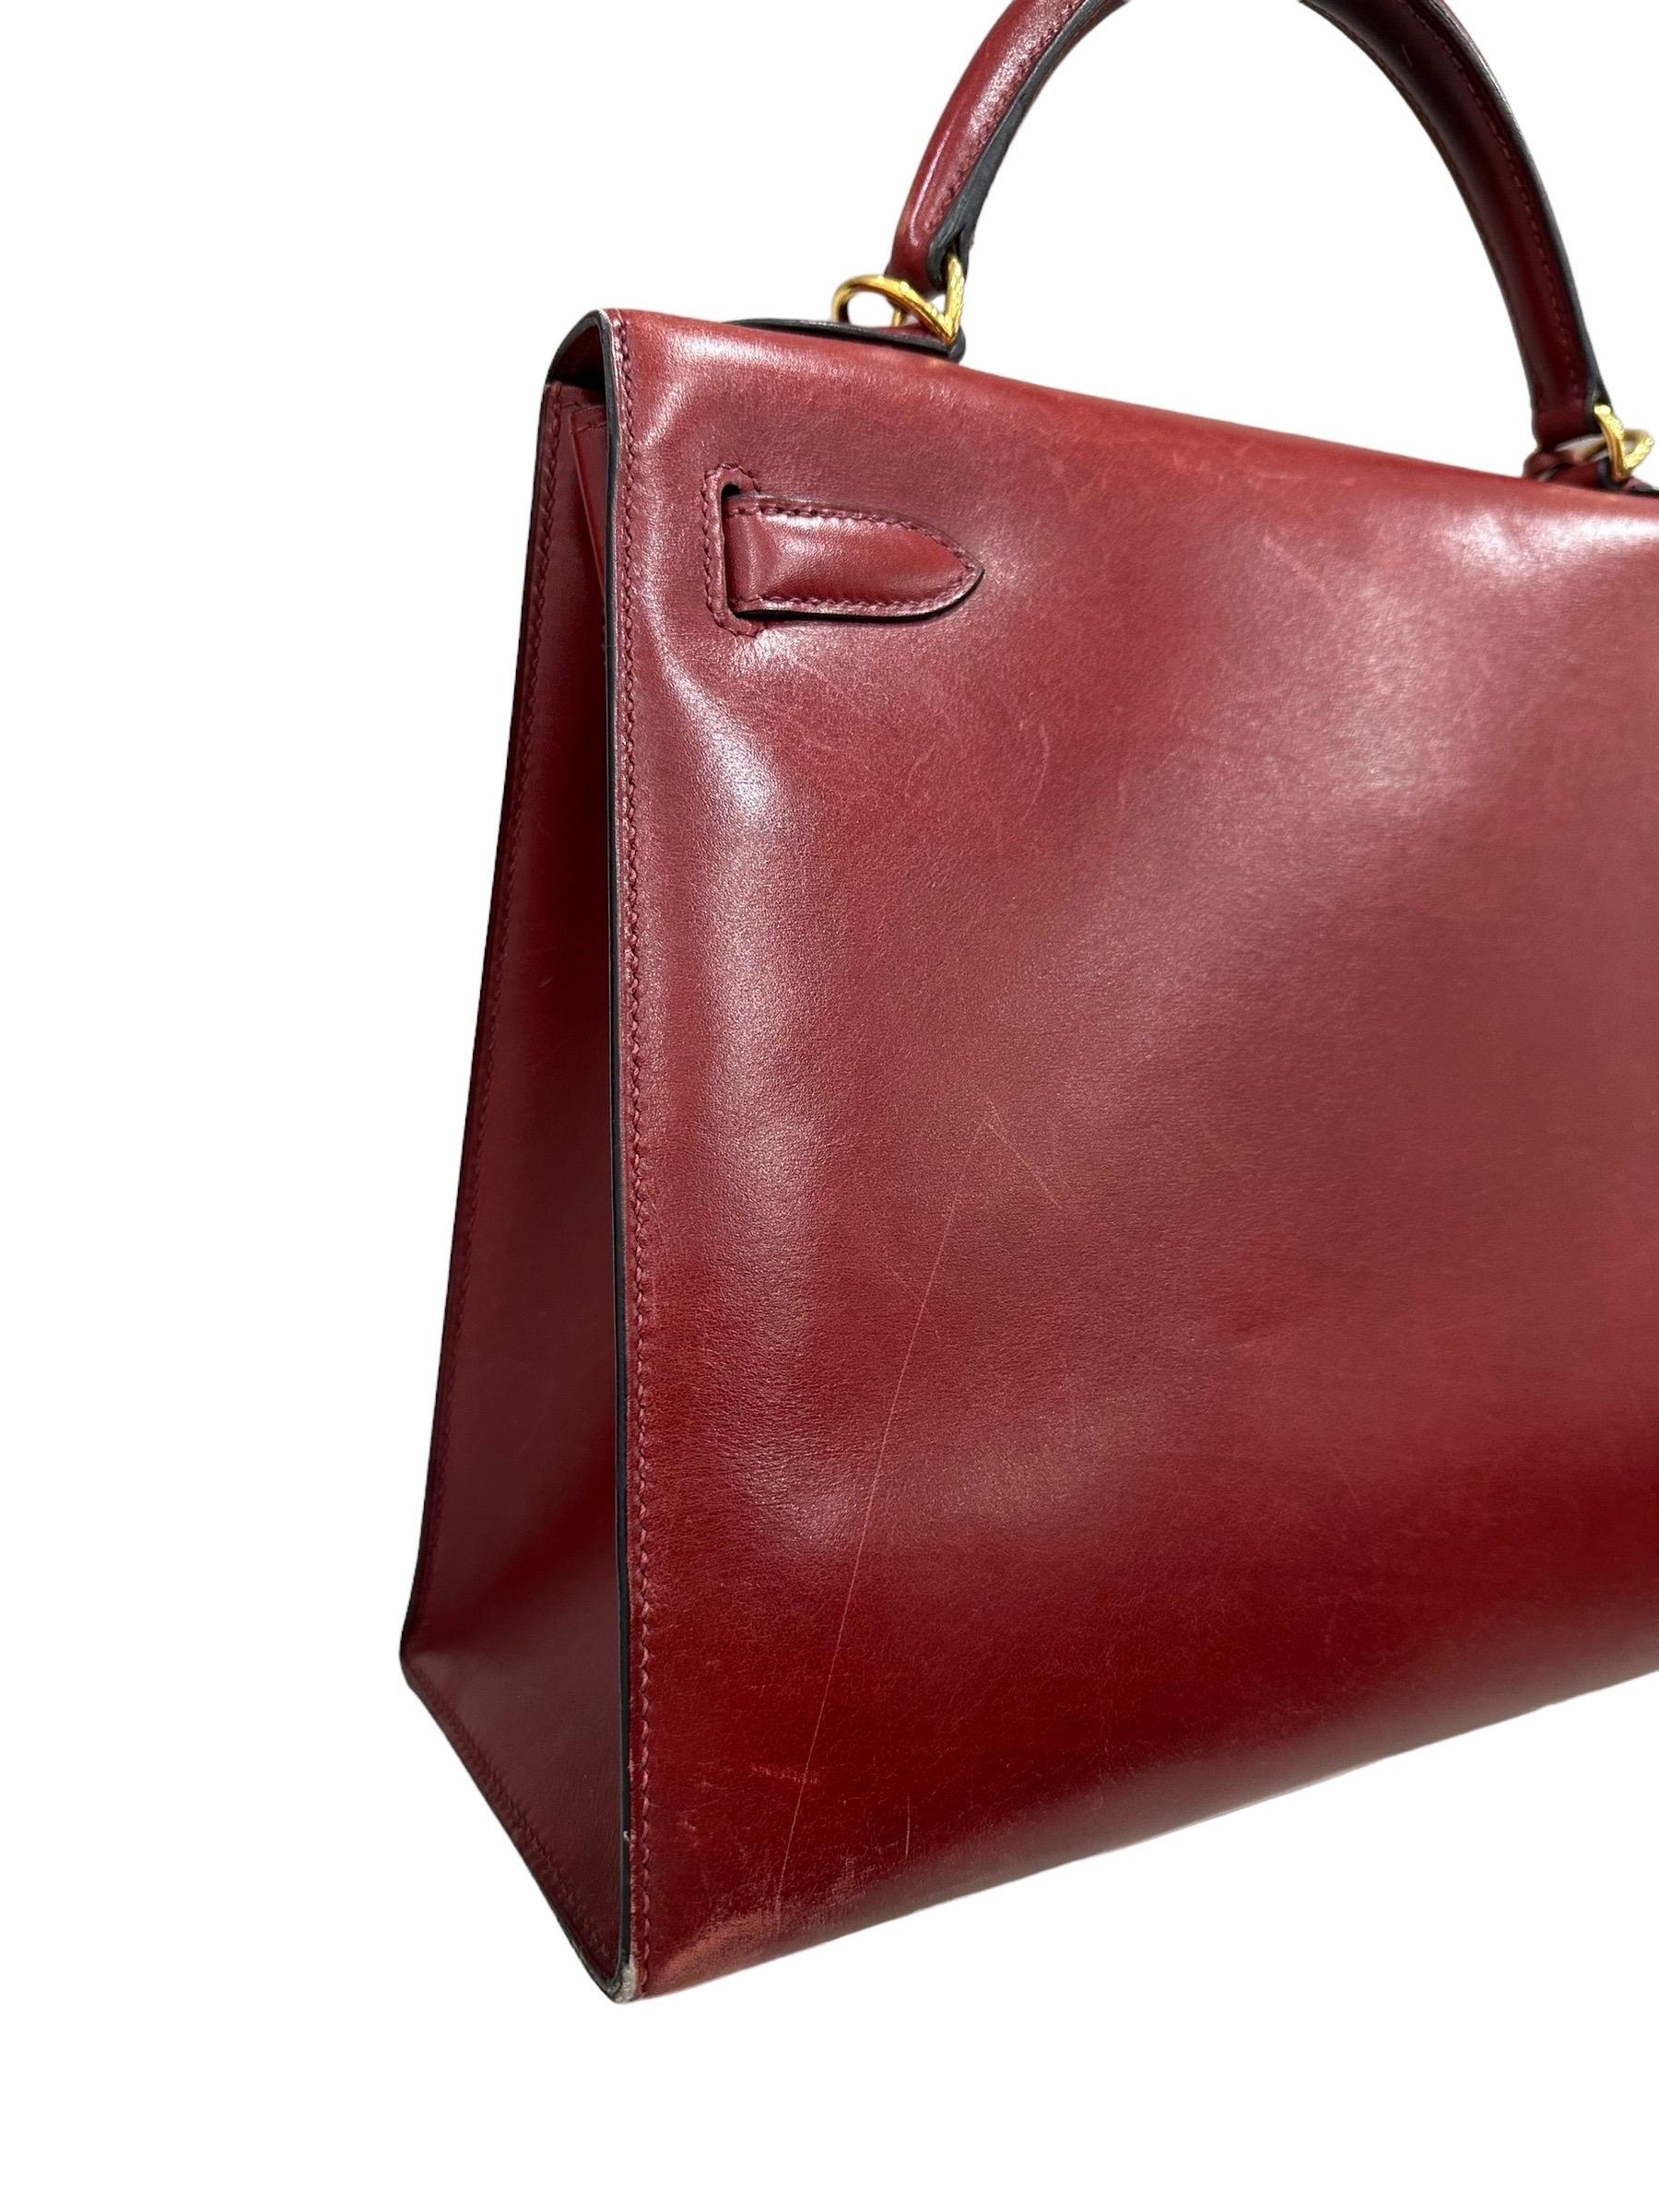 2008 Hermès Kelly 32 Box Calf Leather Rouge H Top Handle Bag 1